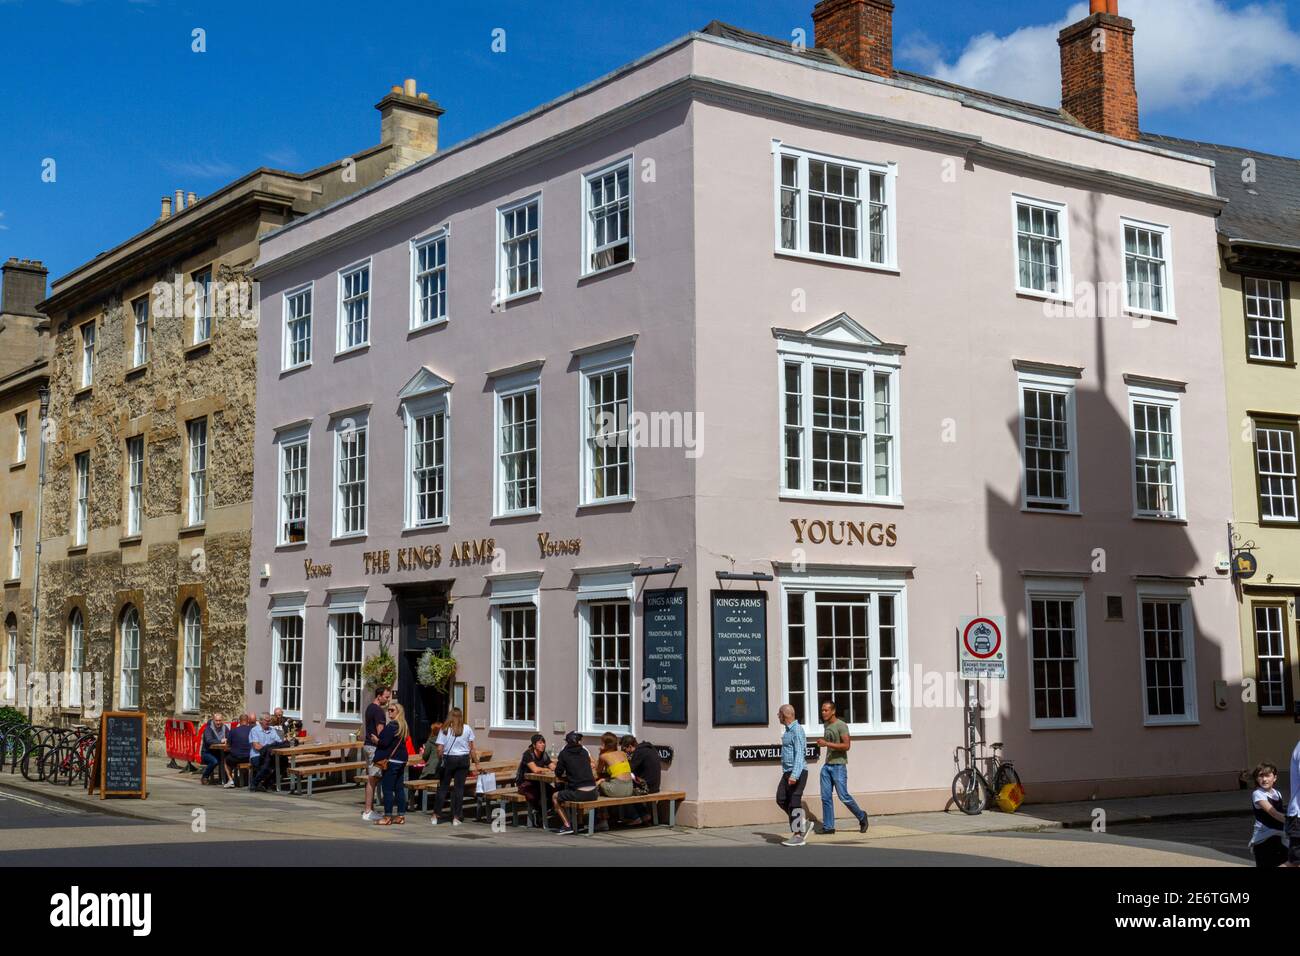 The Kings Arms Public House, ein berühmter Young's Pub, Oxford, Oxfordshire, Großbritannien. Stockfoto